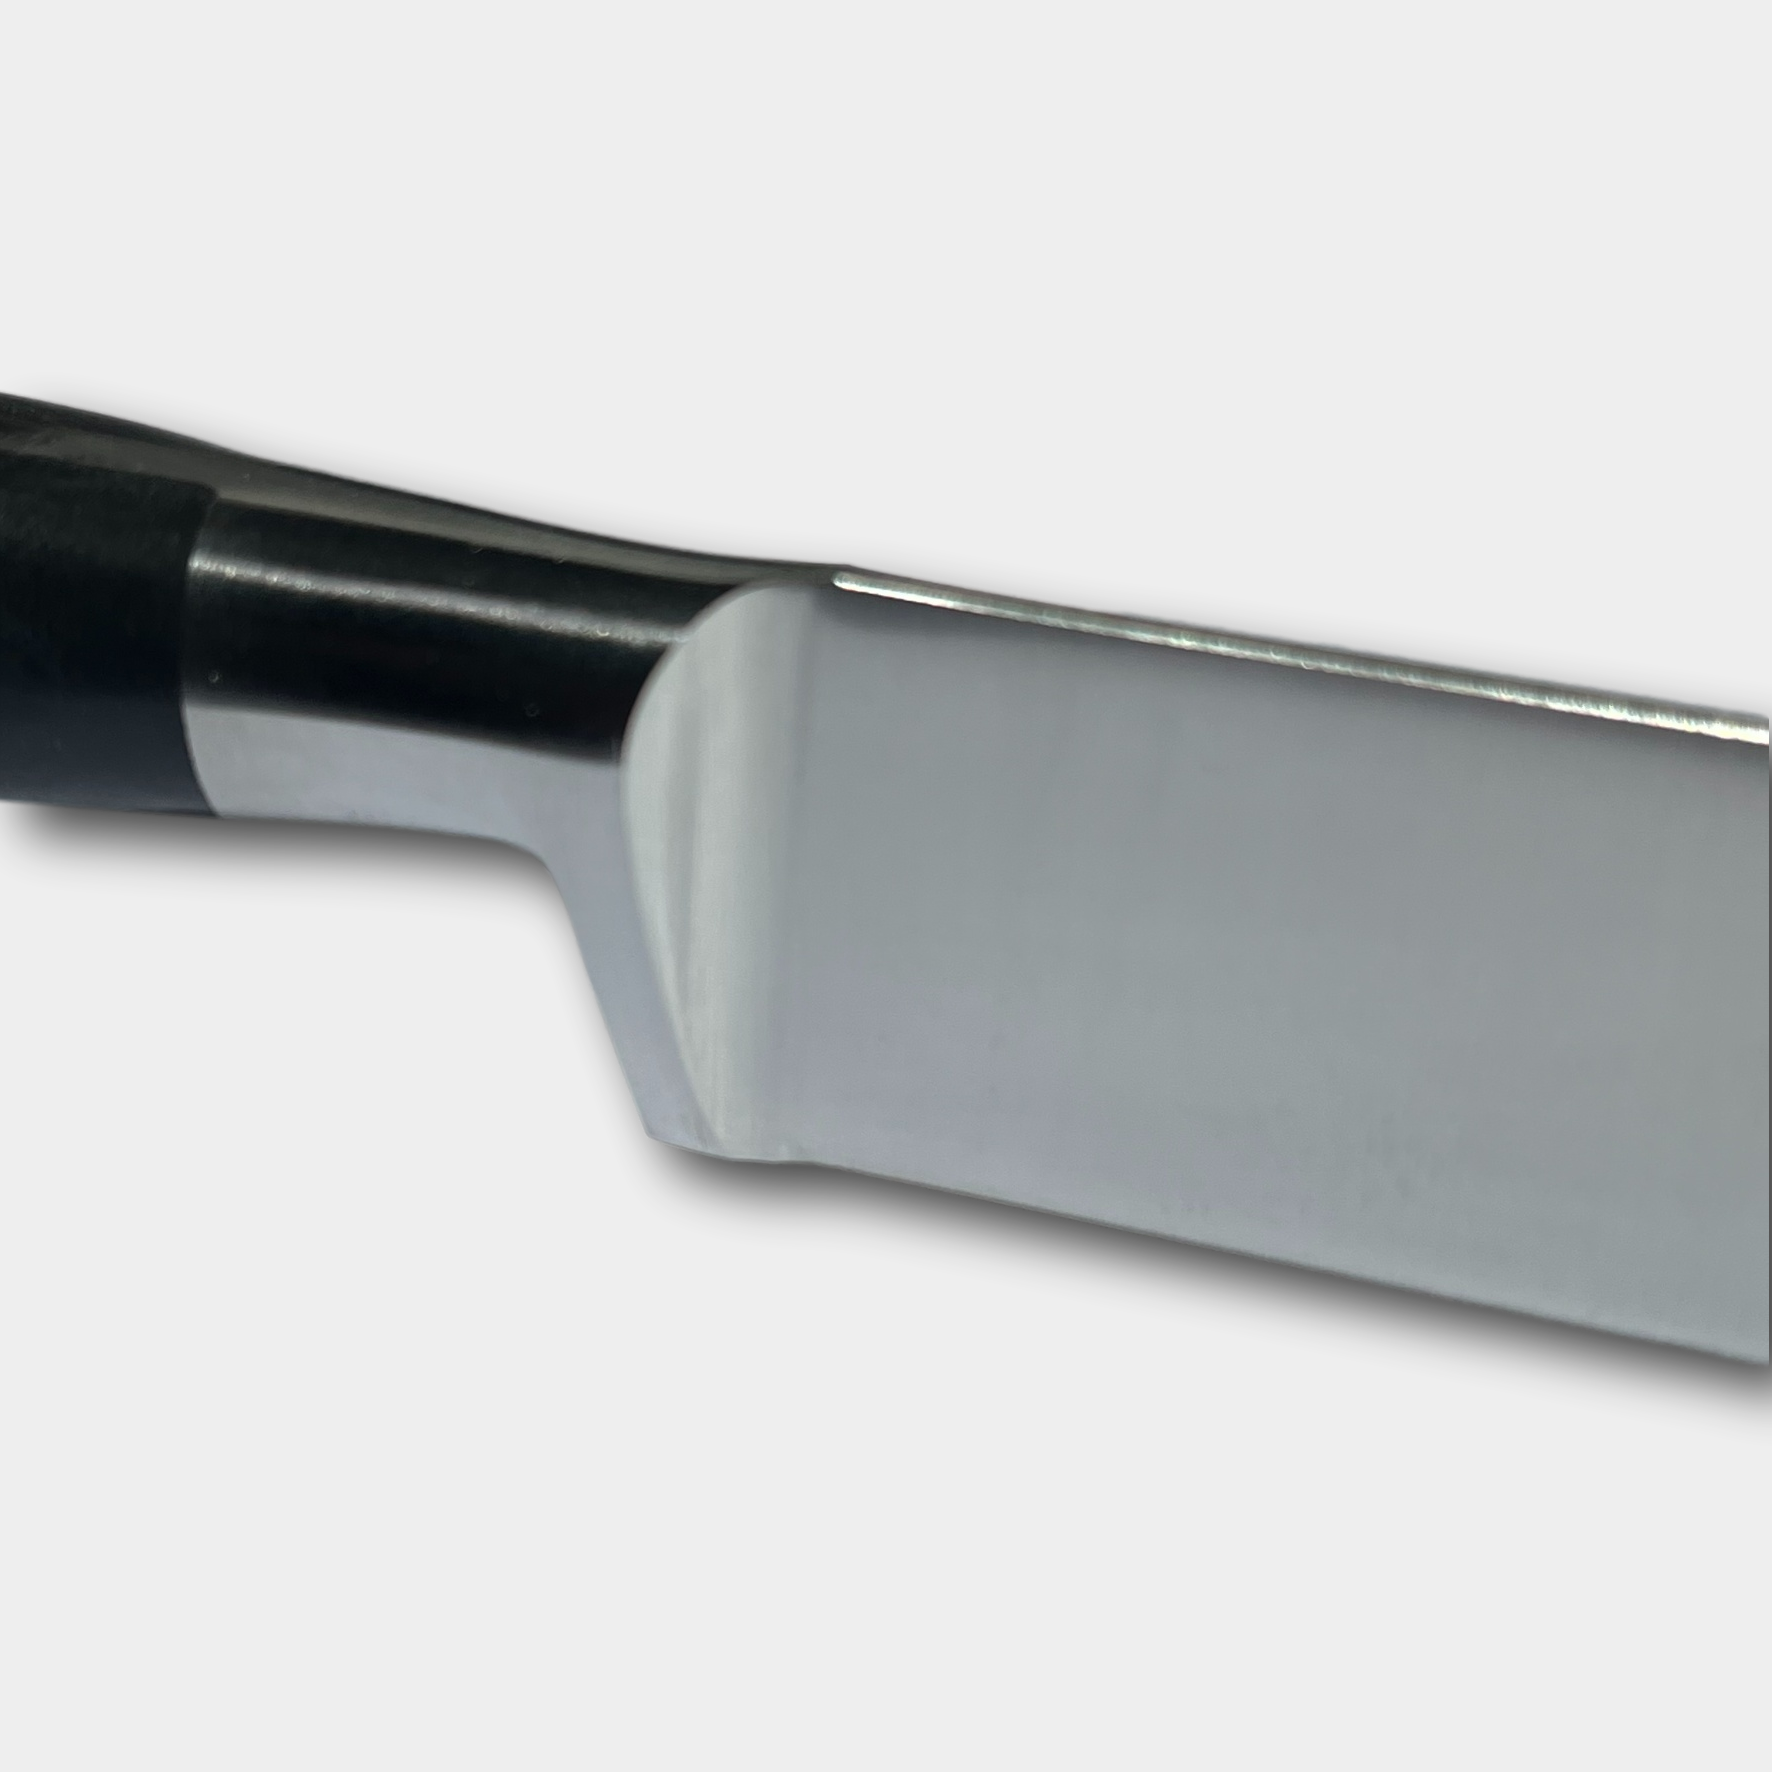 Lion Sabtier Ideal Steel 6cm Paring Knife